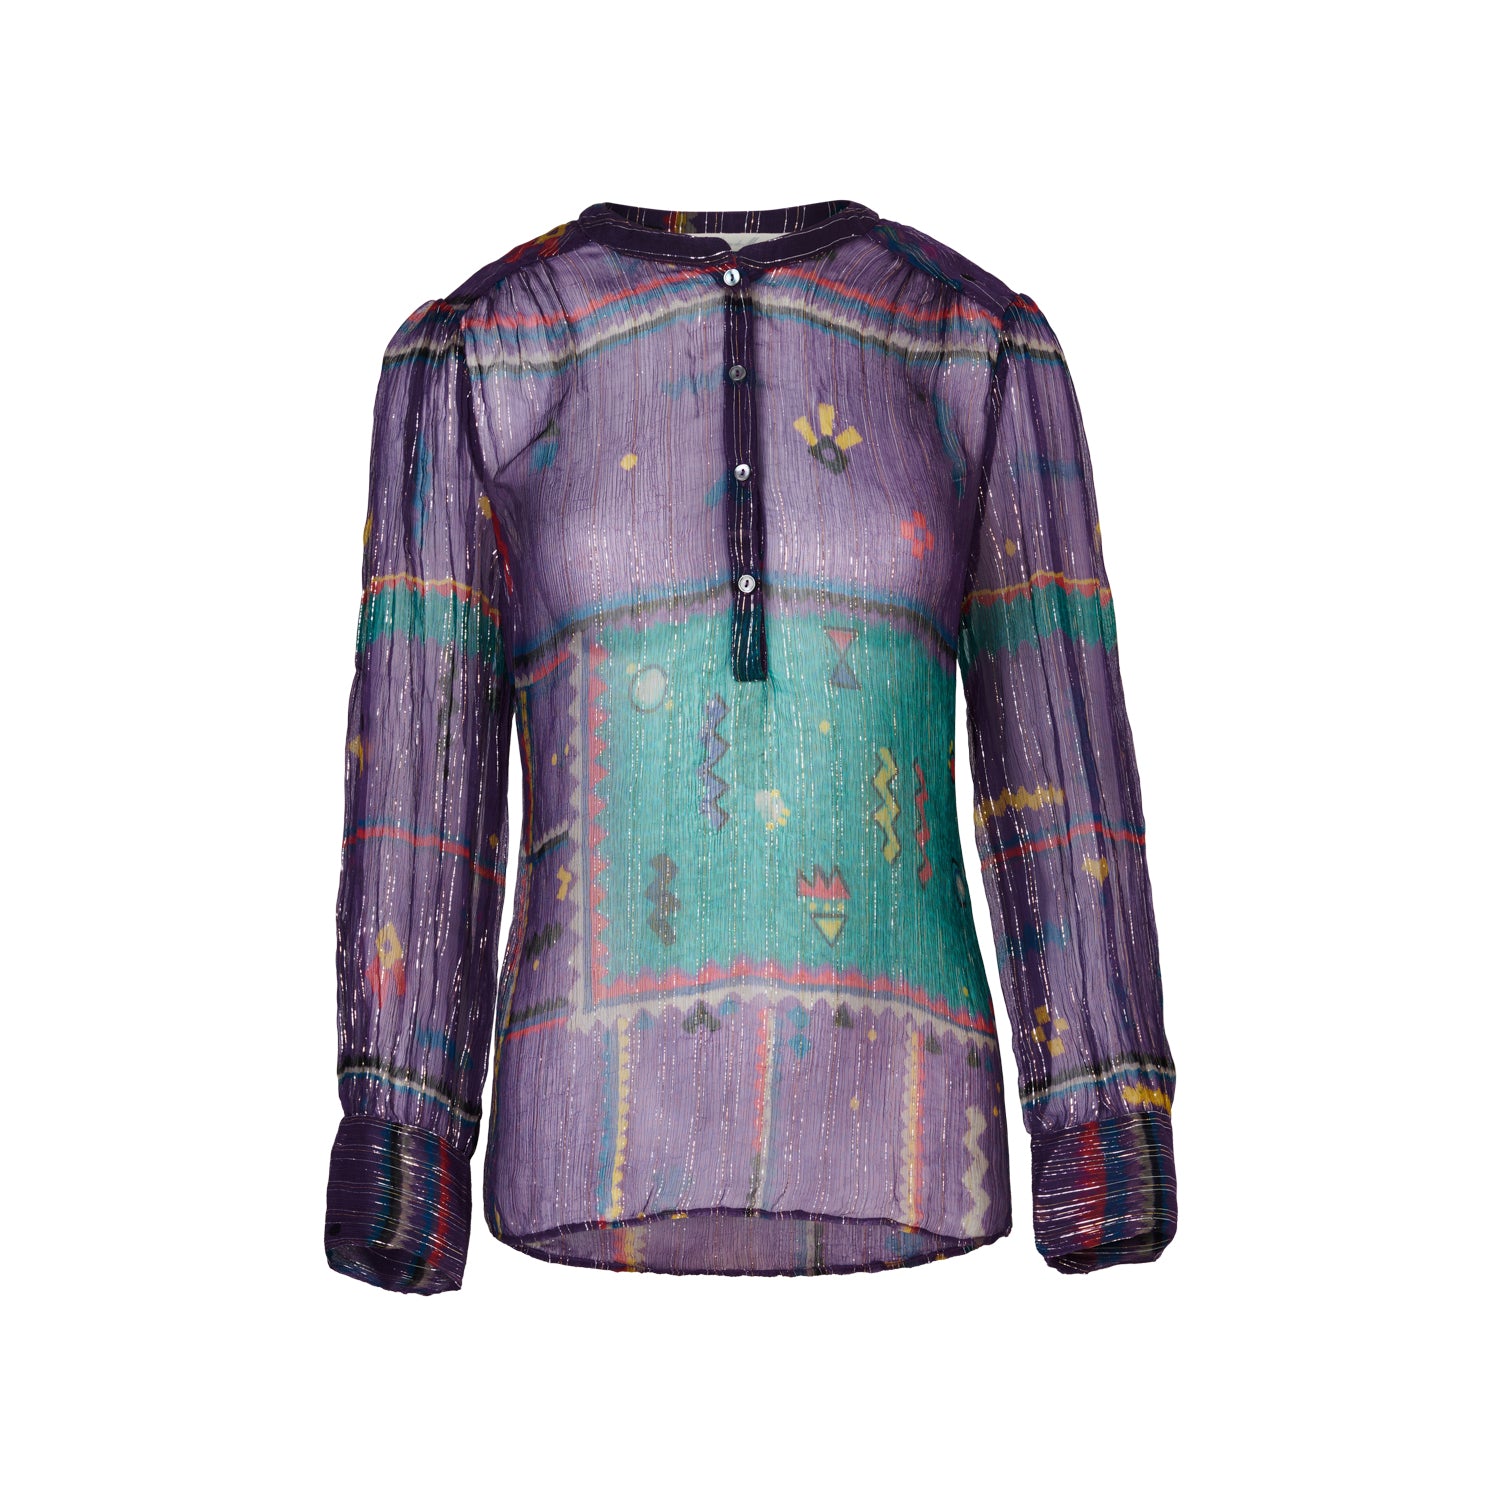 Amelie blouse in Iridescent Rainbow print